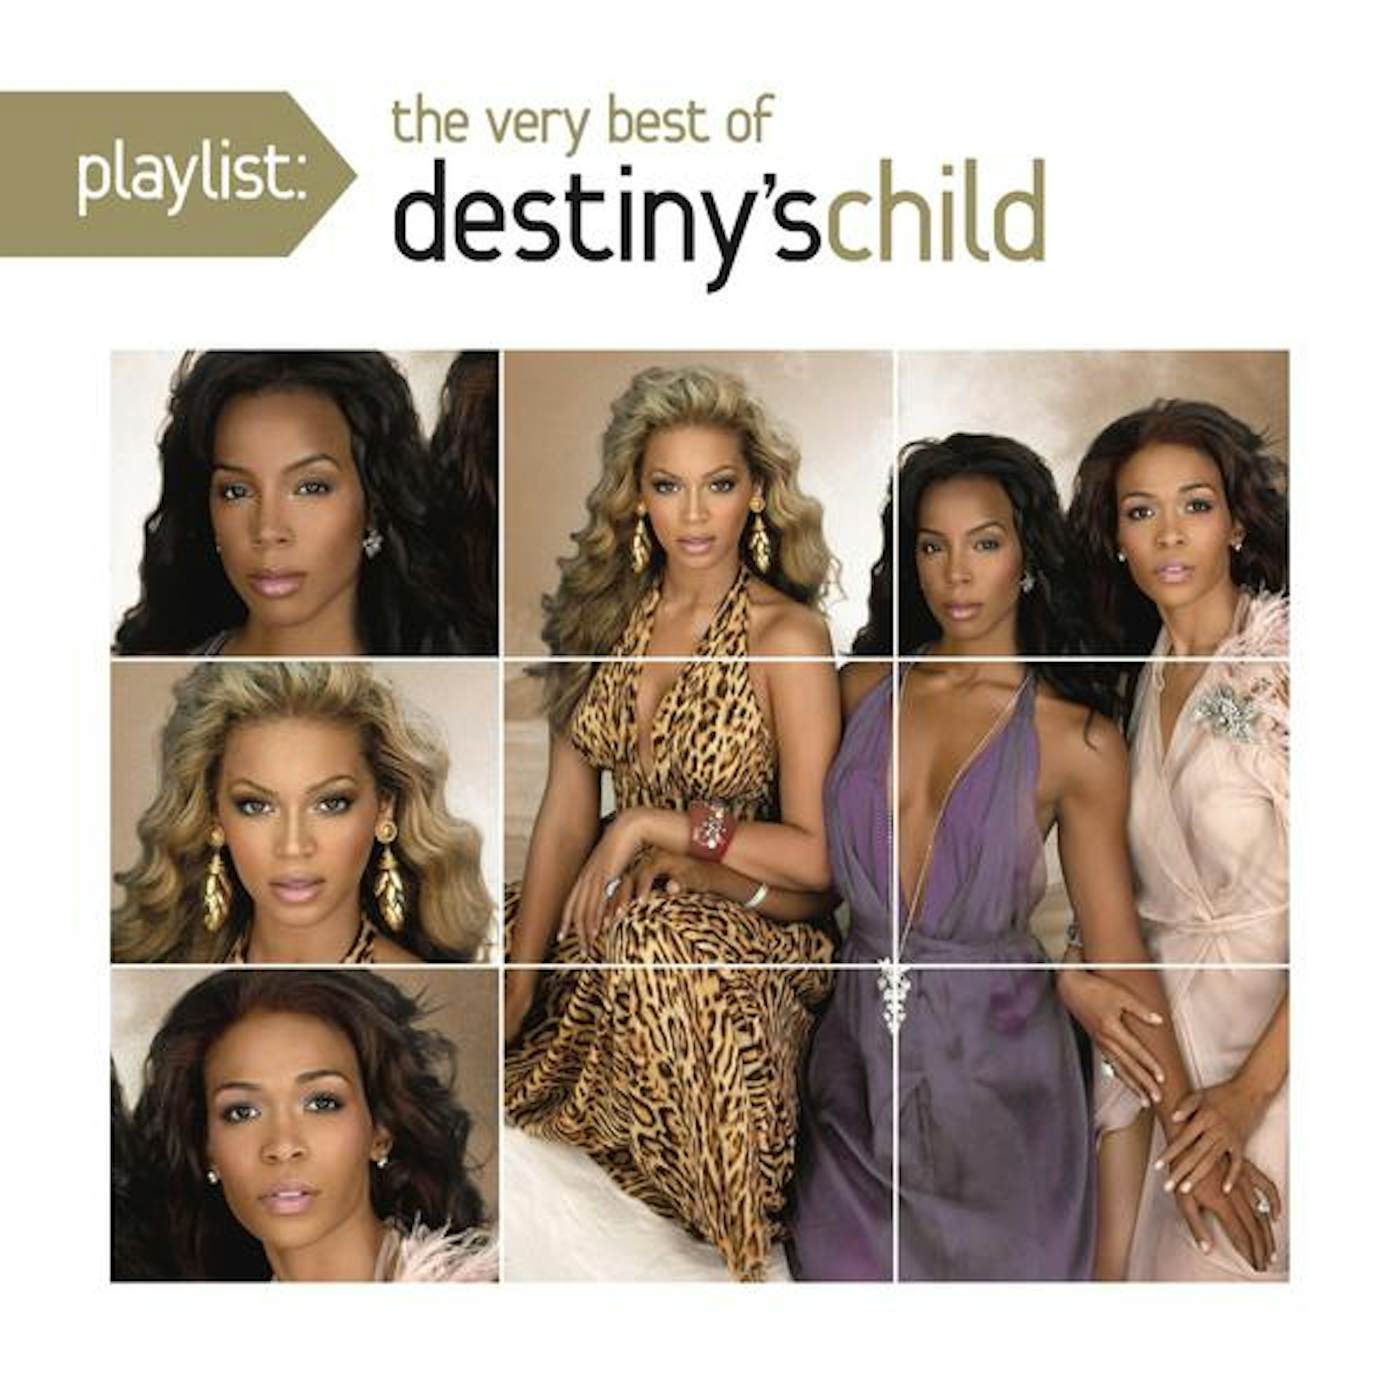 Destiny's Child PLAYLIST: THE VERY BEST OF CD